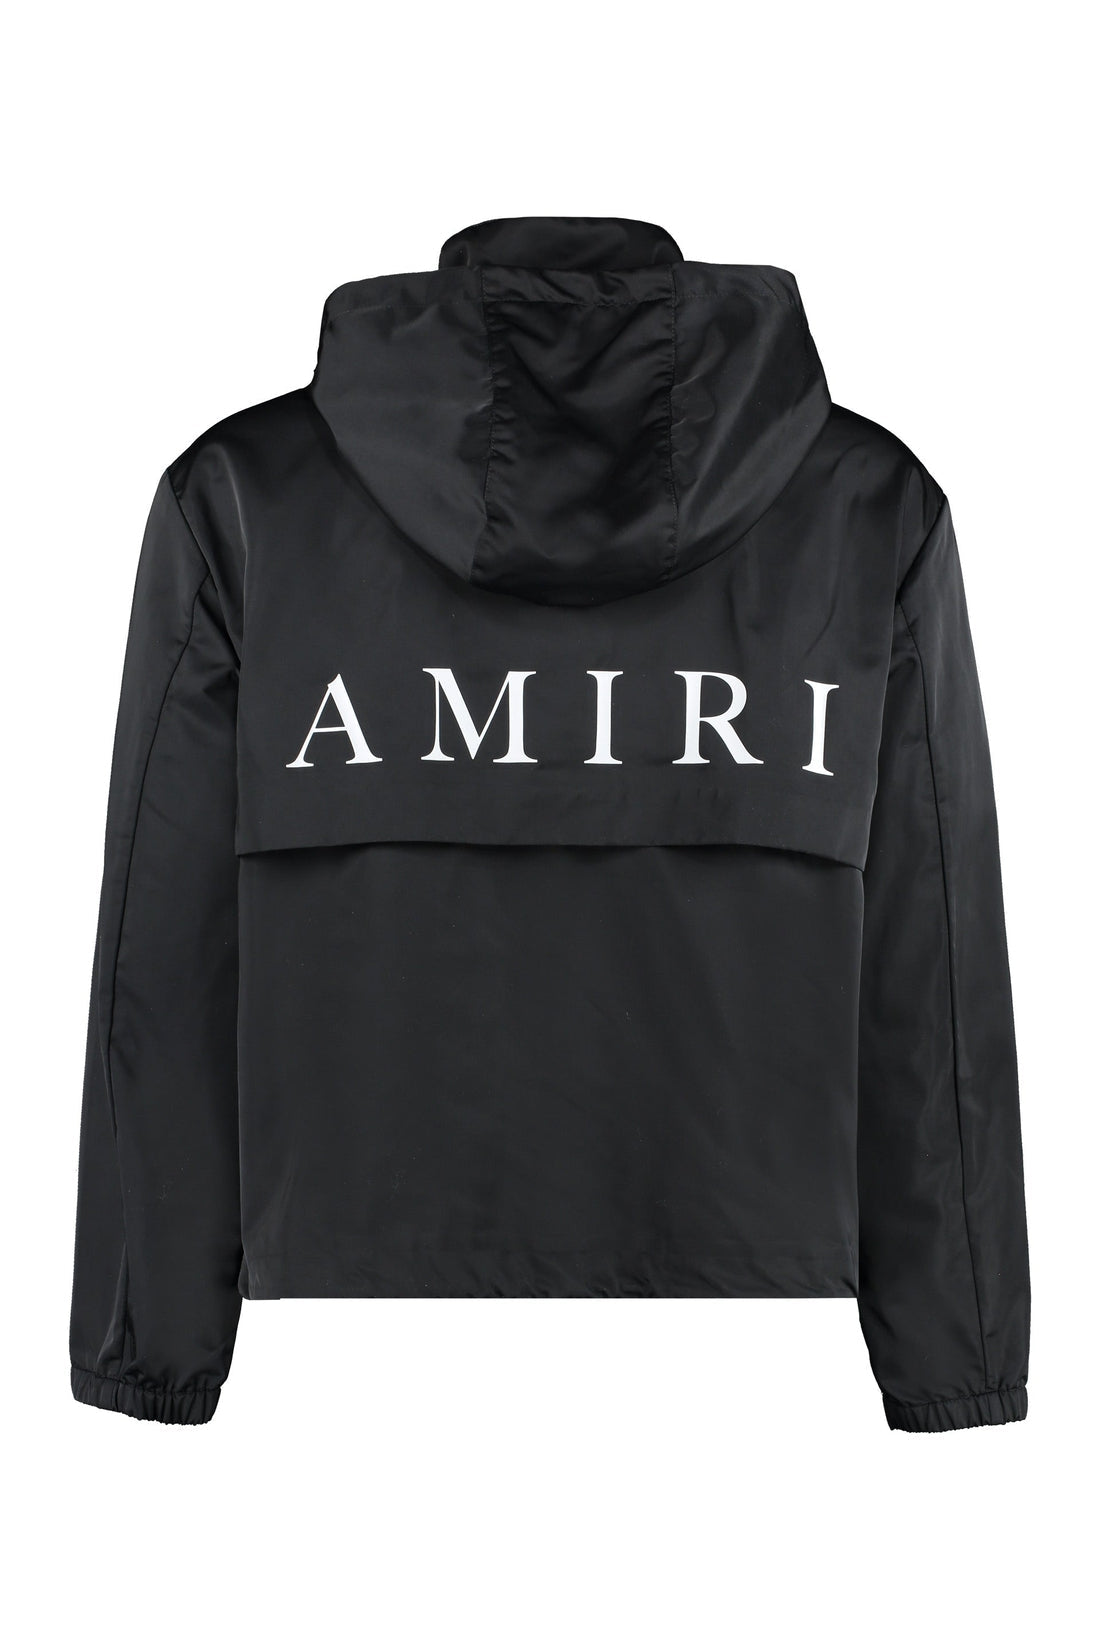 AMIRI-OUTLET-SALE-Nylon windbreaker-jacket-ARCHIVIST